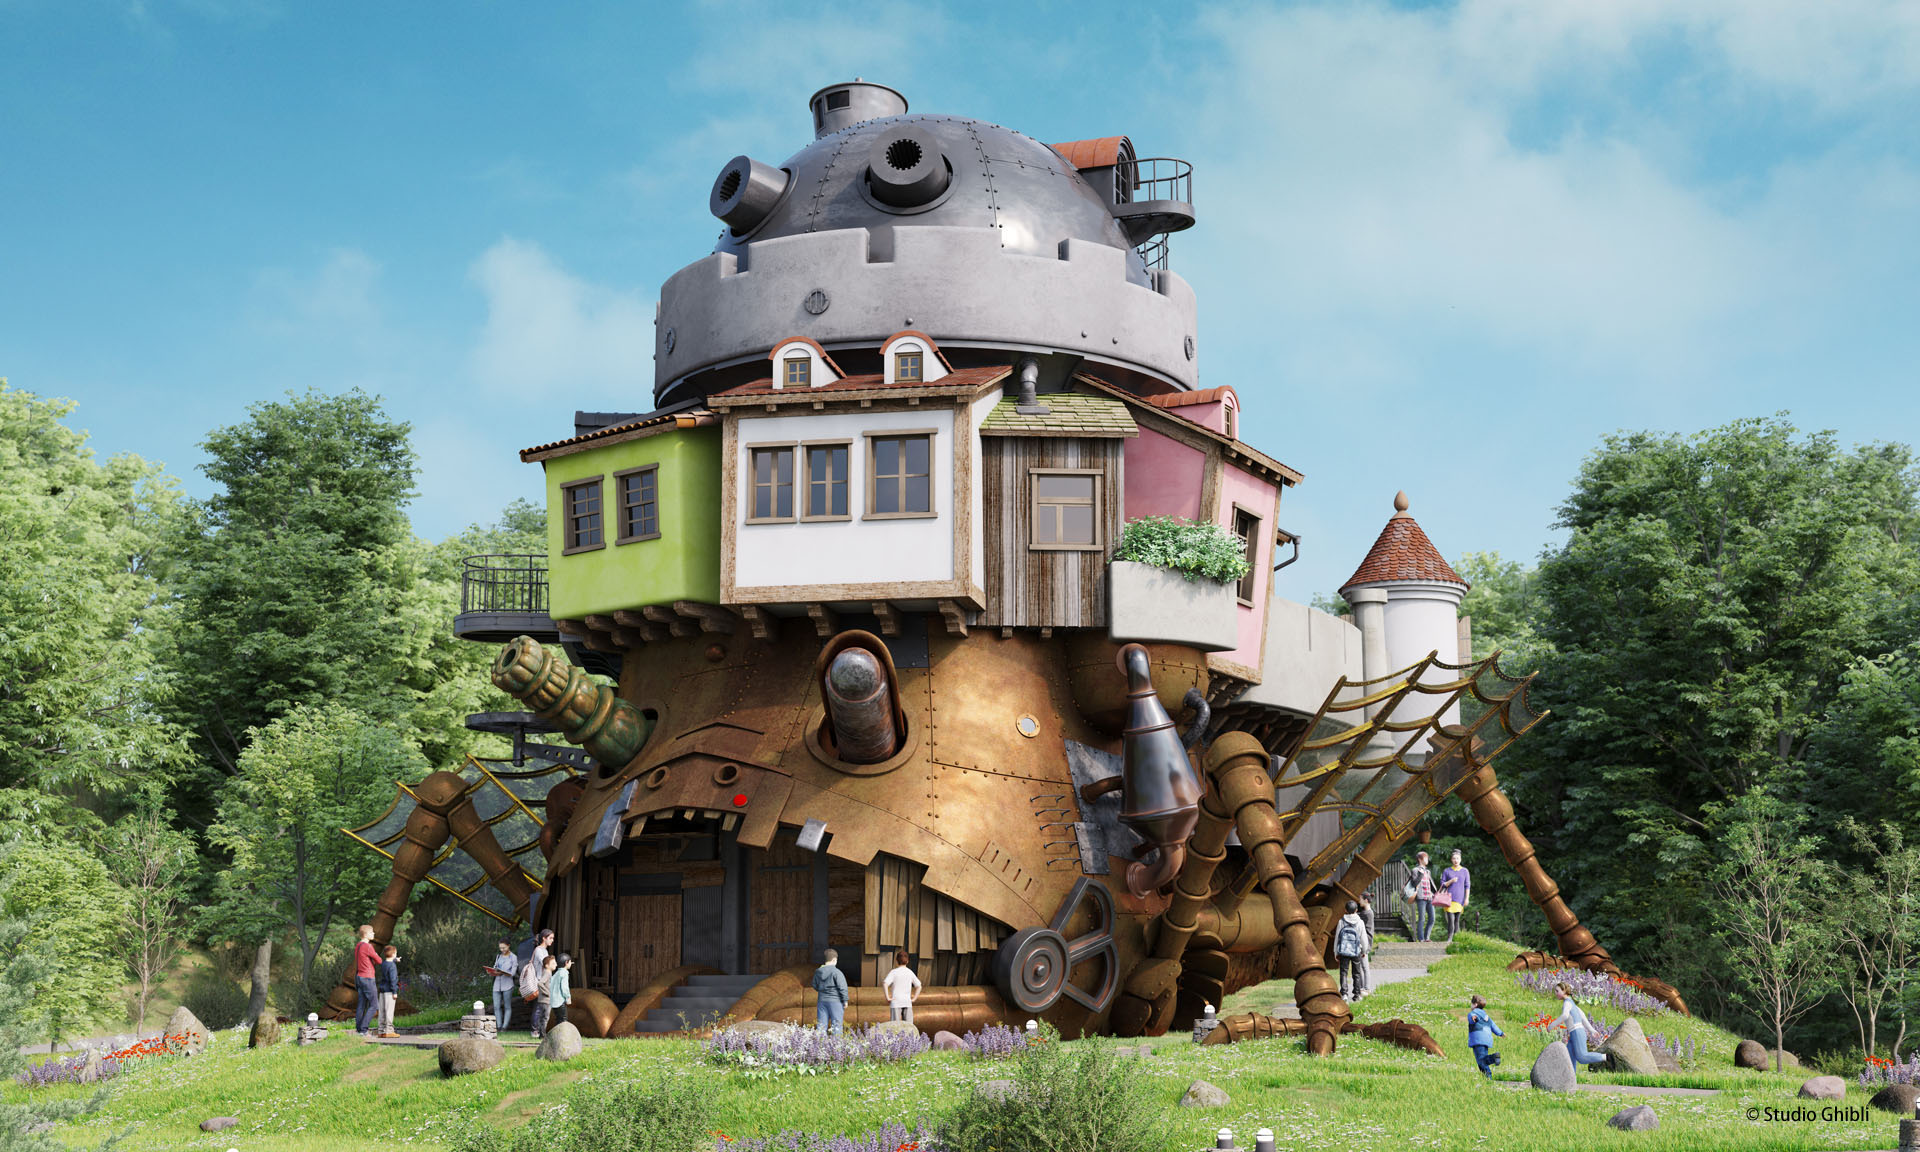 A Visit to Ghibli Park, a Miyazaki Theme Park - The New York Times